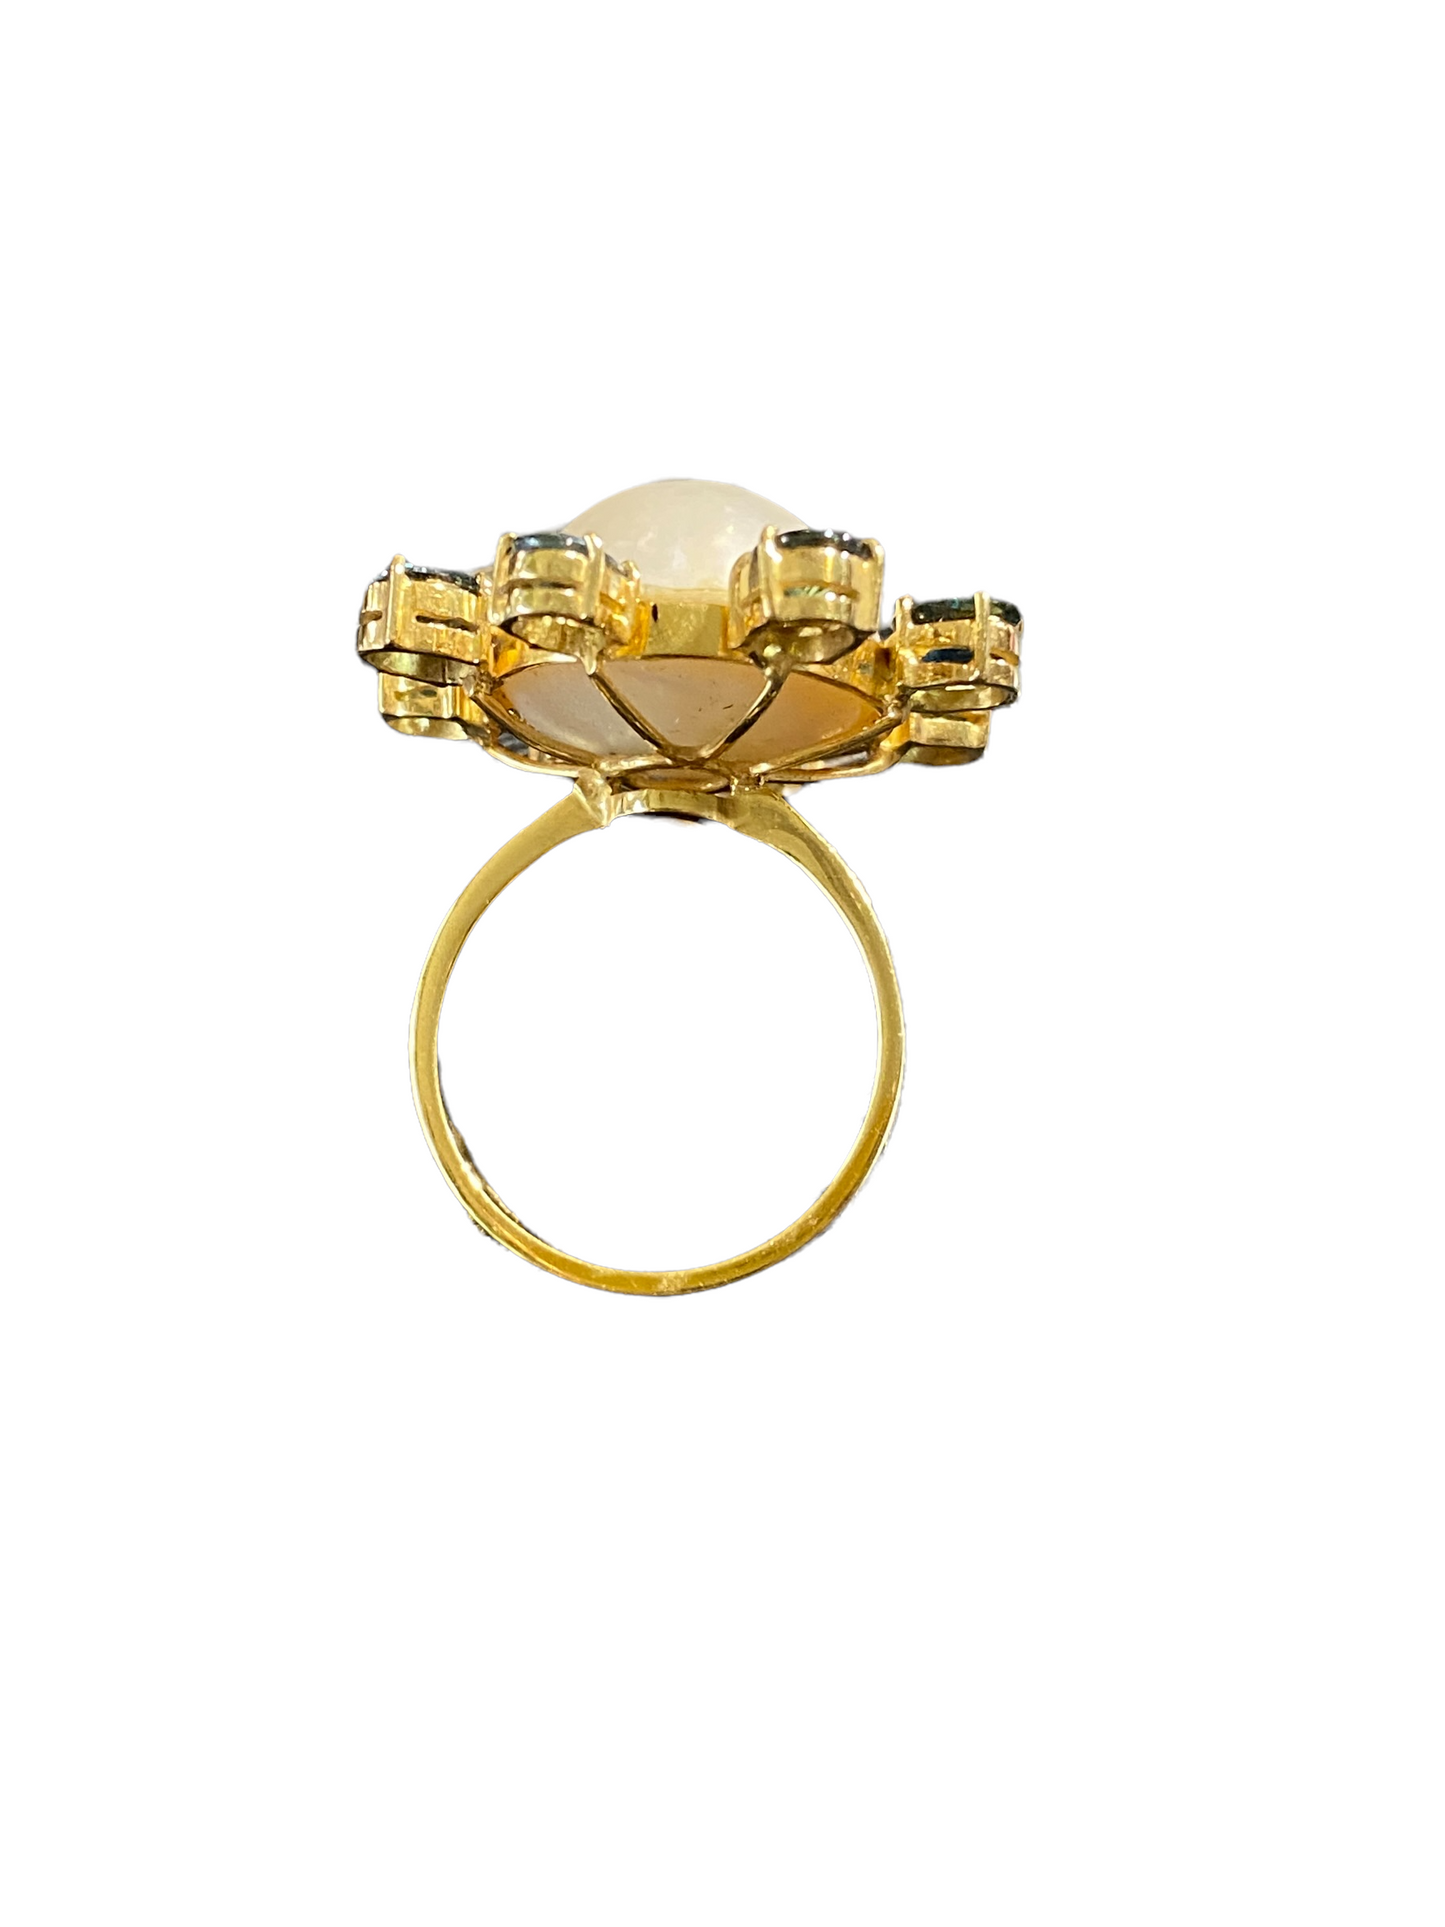 #2013 Retro 18 KT  Yellow Gold Maube Pearl & Sapphire  Ring